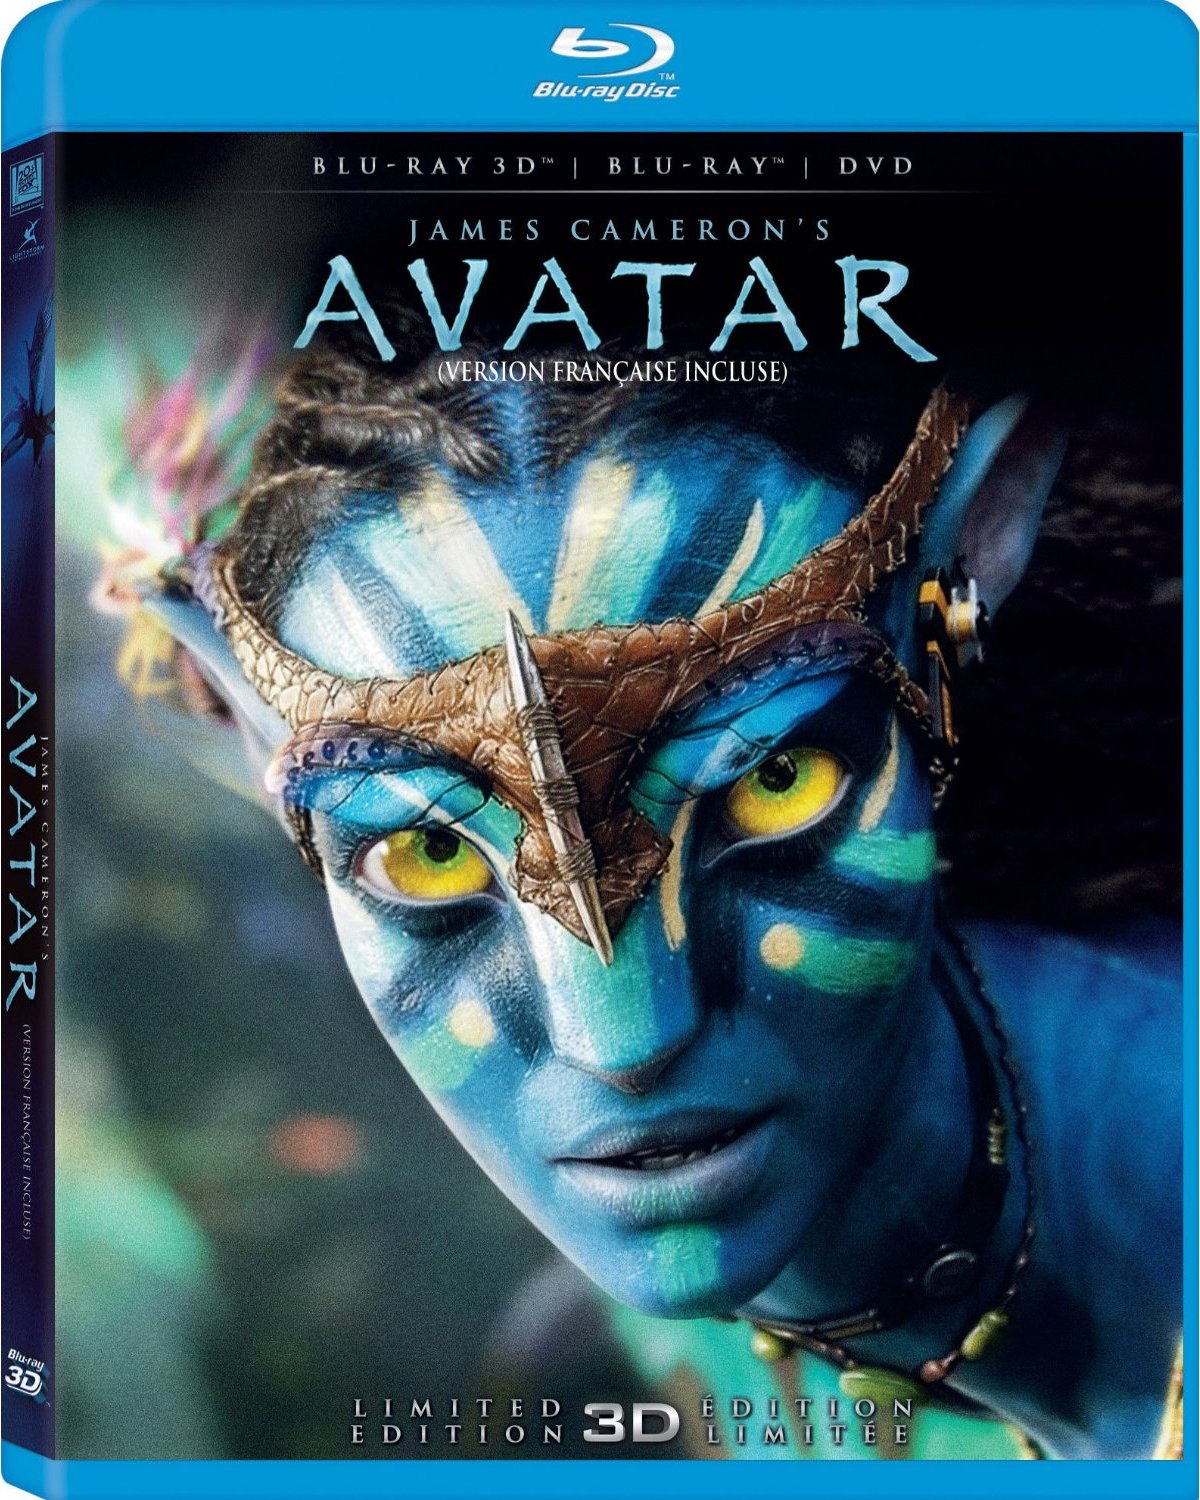 Avatar (2009) *** Blu-ray review | | De FilmBlog